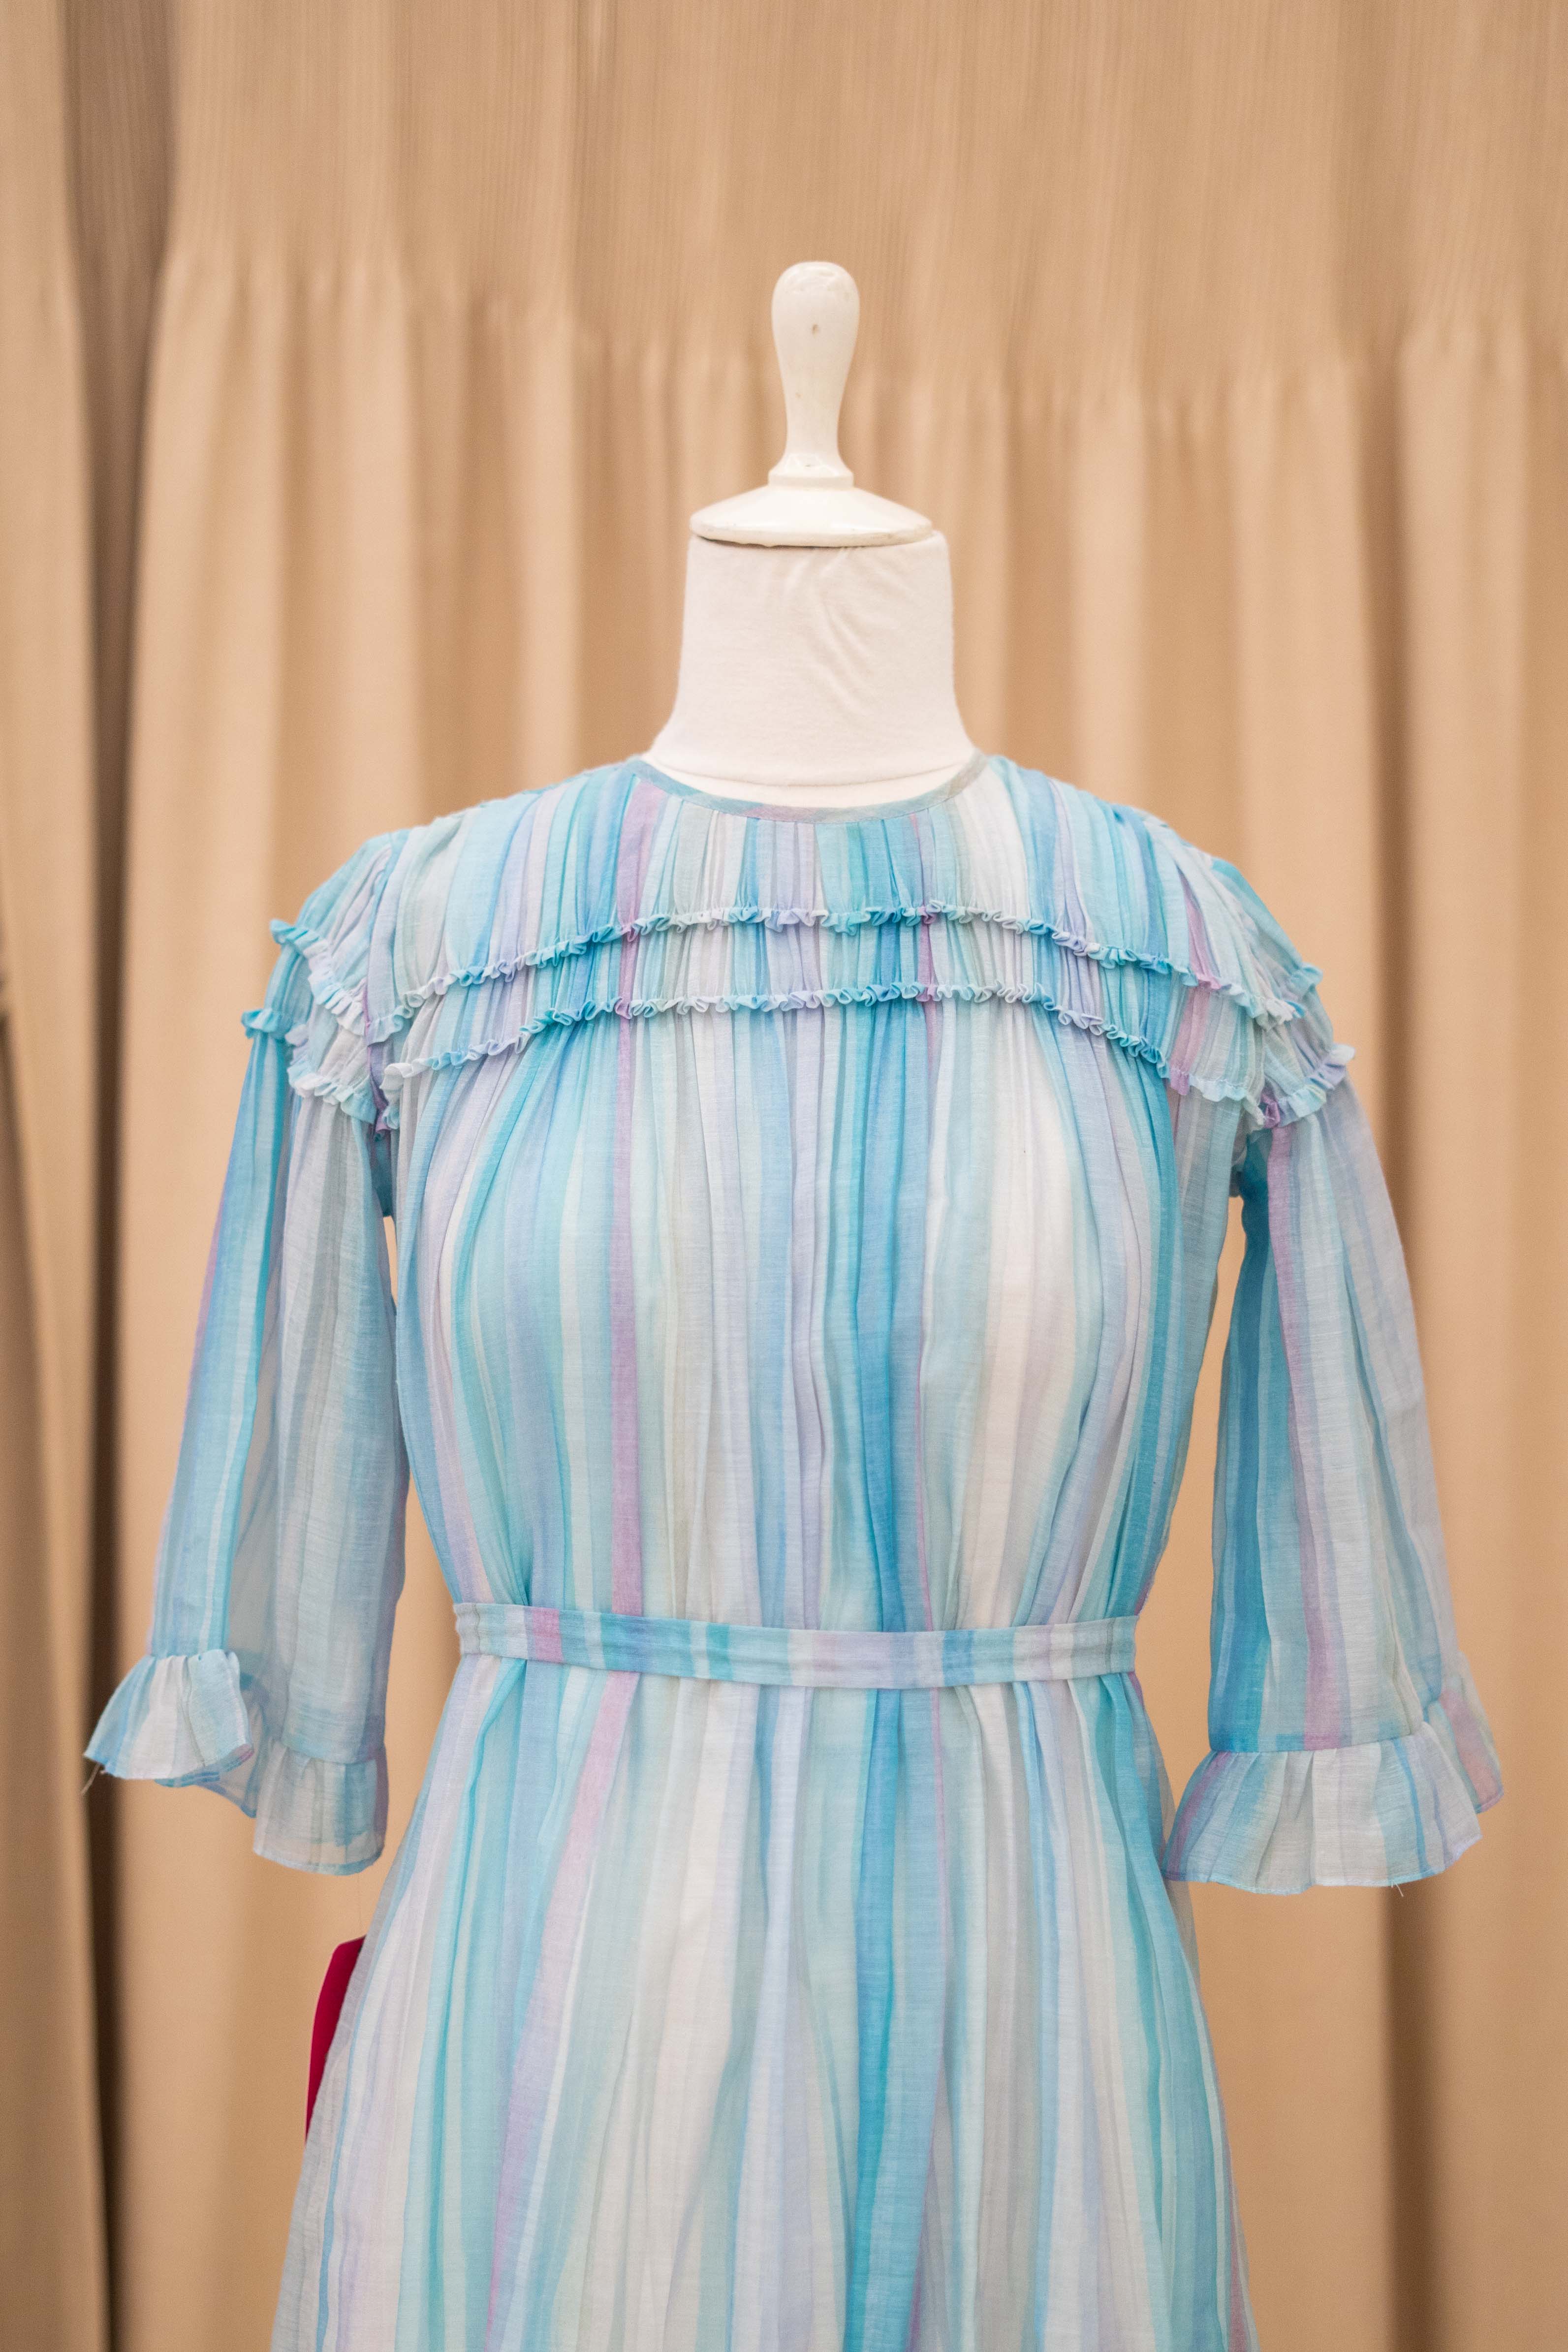 DS - blue stripes dress